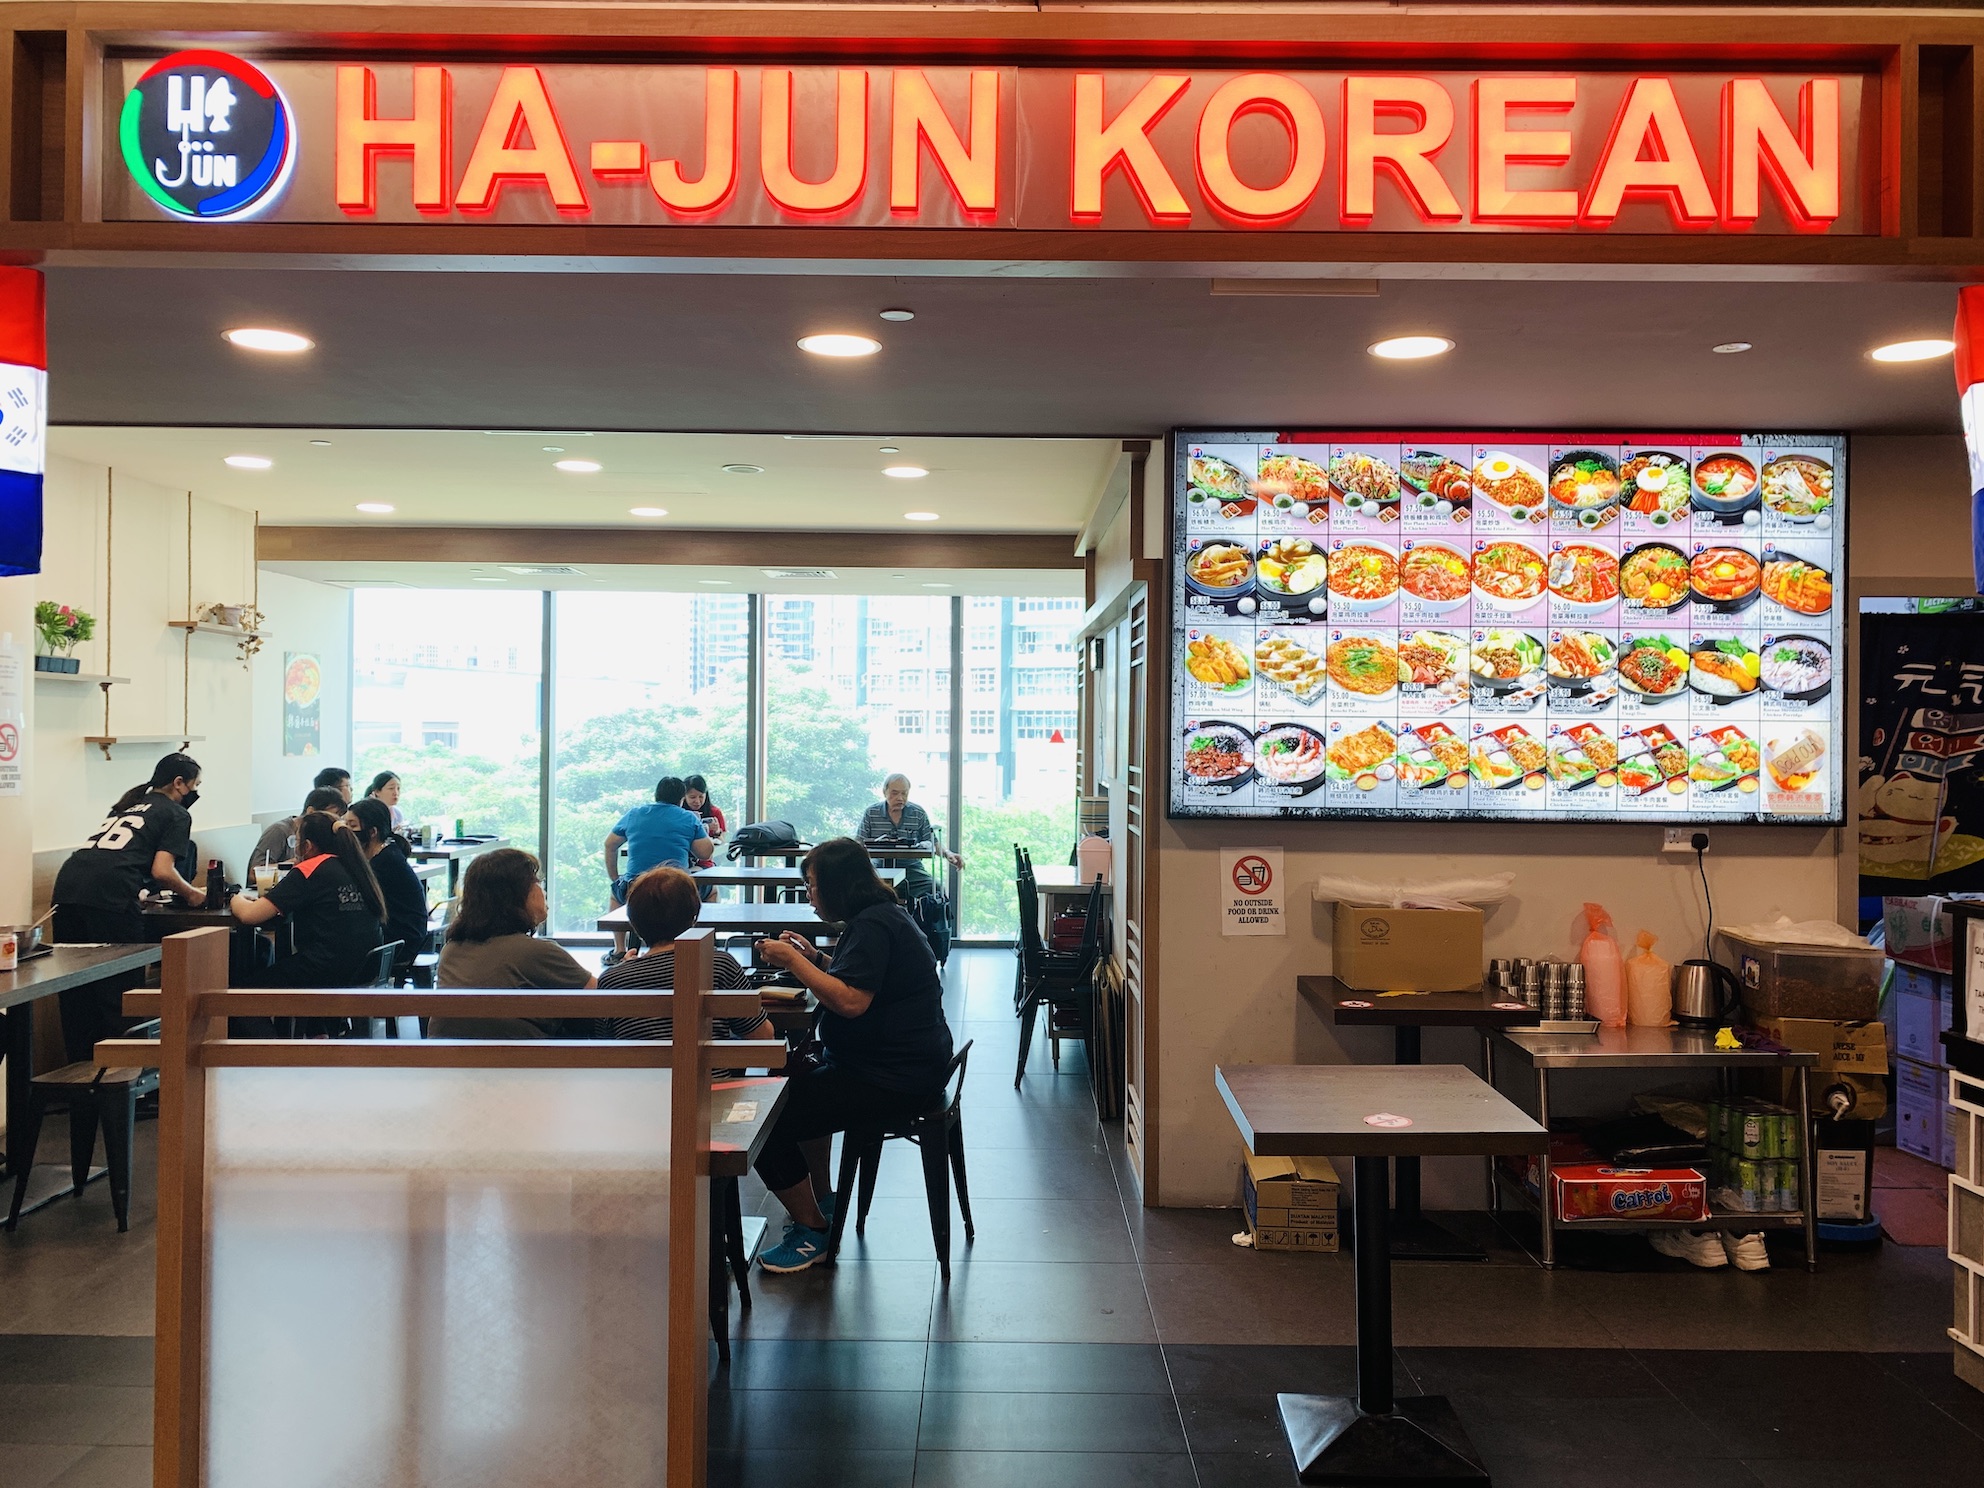 Ha-Jun Korean - Restaurant Front